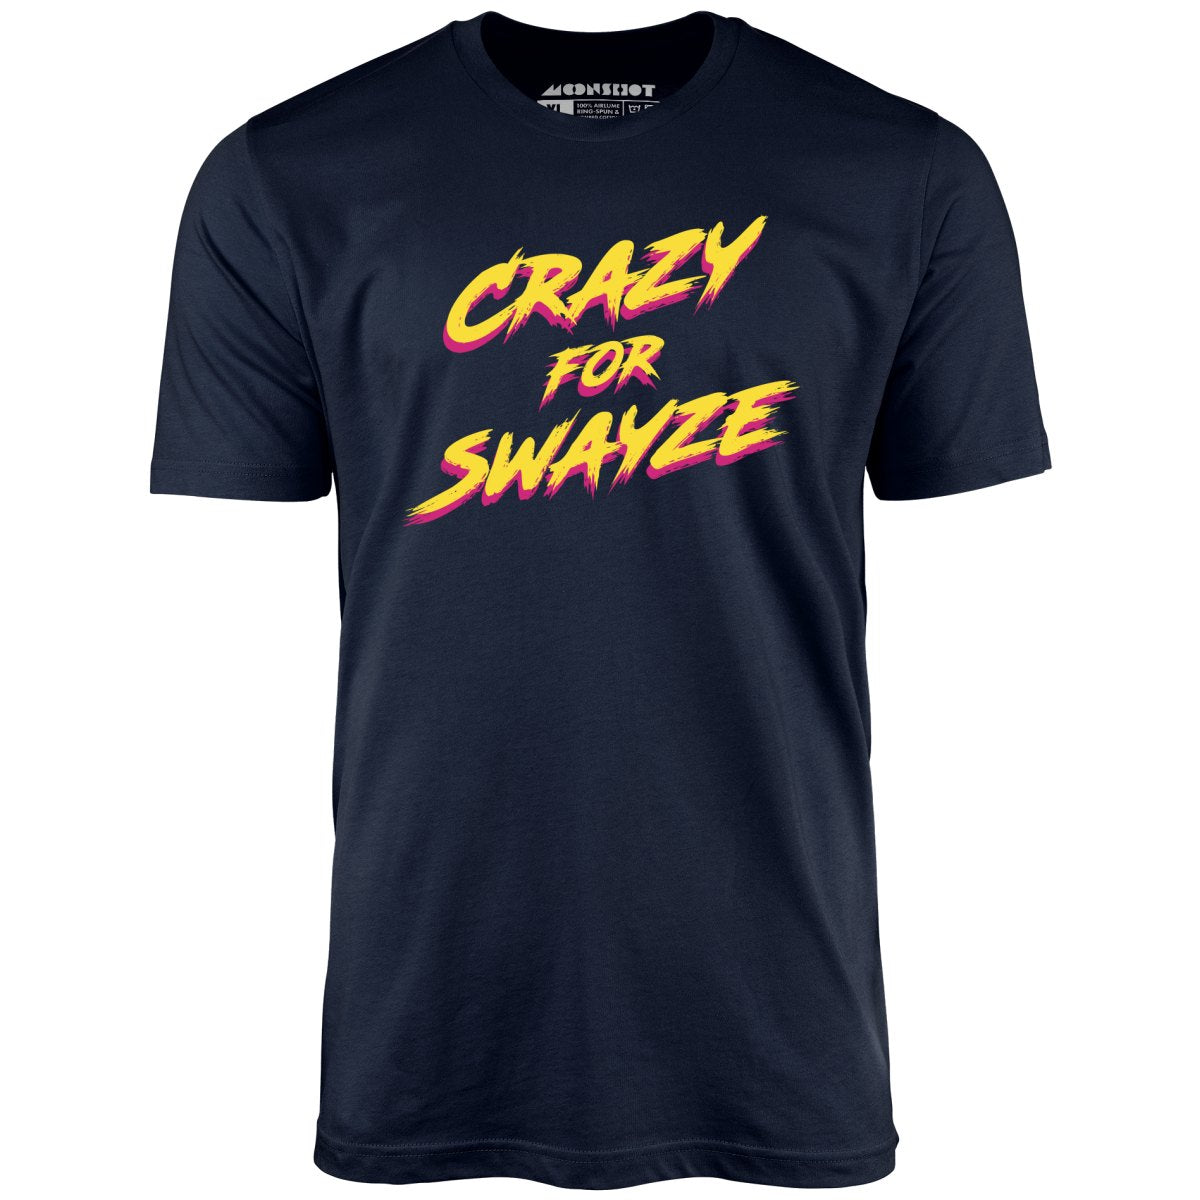 Crazy for Swayze - Unisex T-Shirt